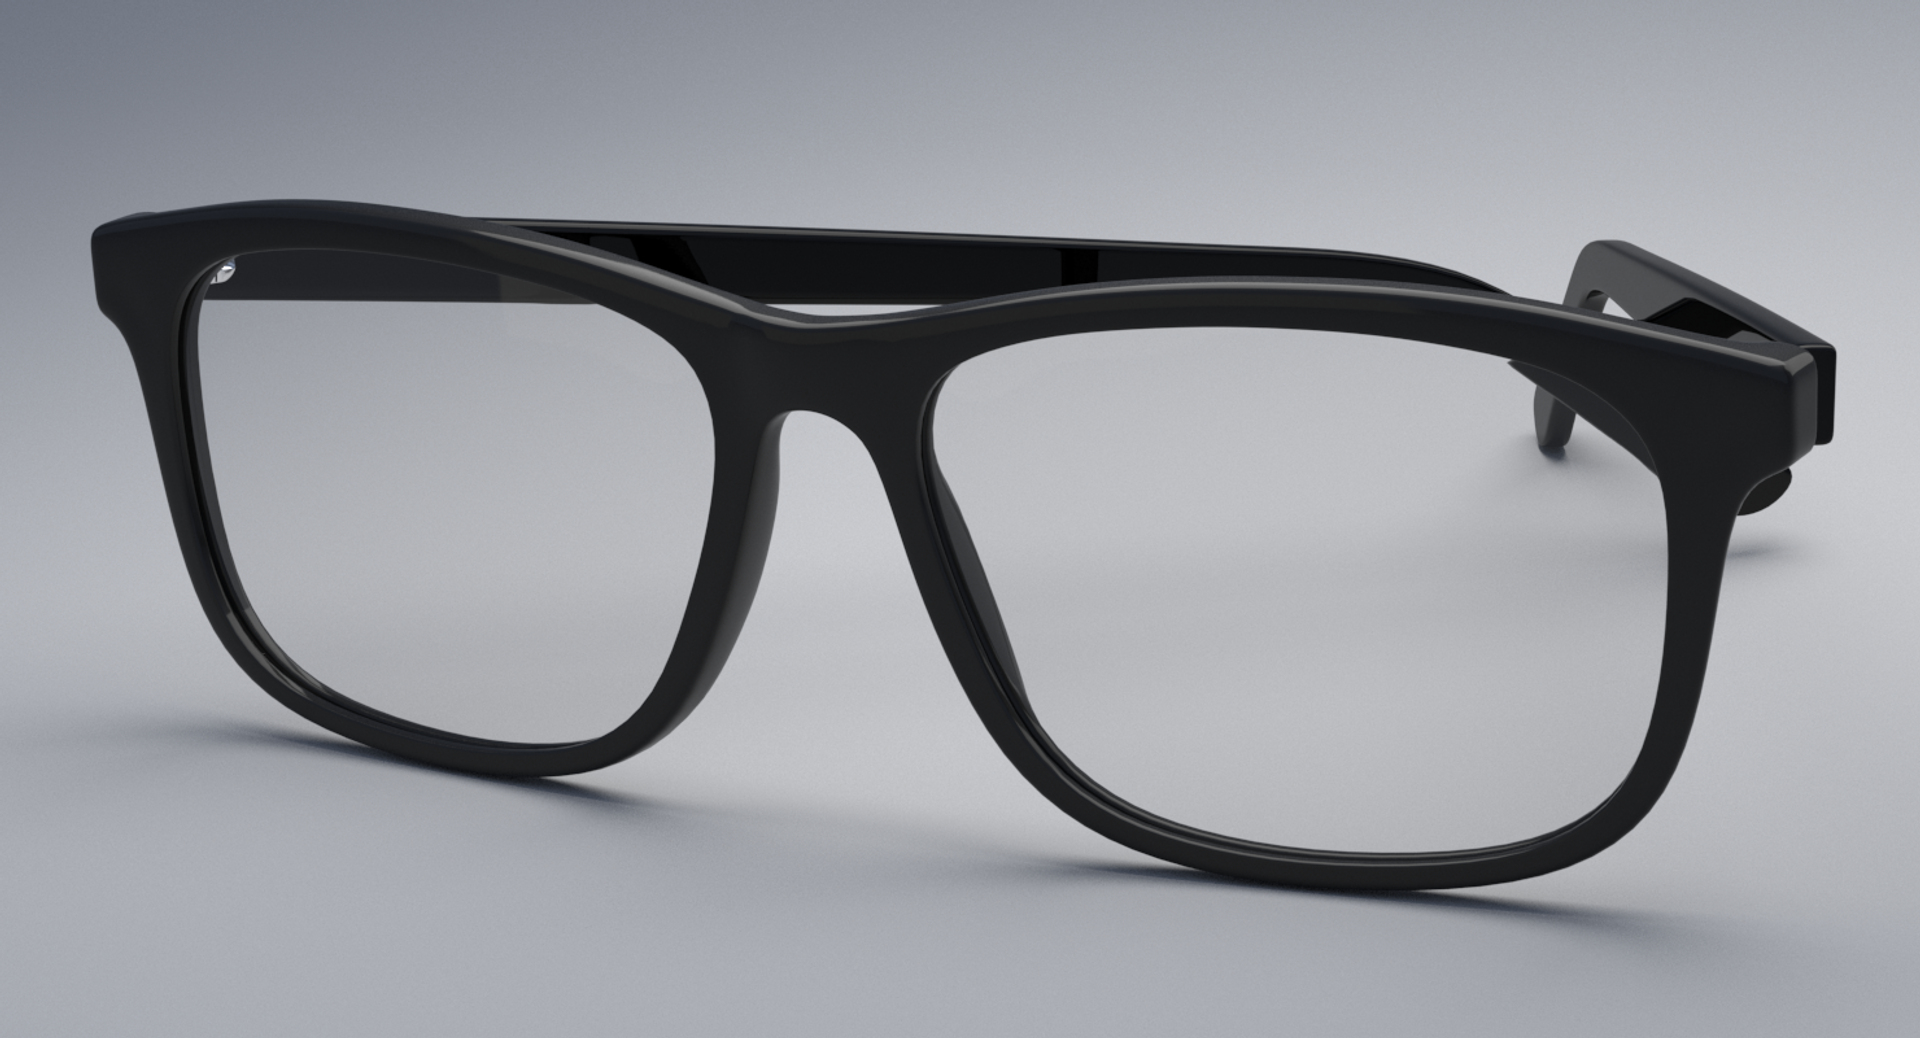 Strong glasses. Очки Discovery d0003. Очки 3ds Max. Очки 3d Glasses ft100 от Future 3d Education Technology co. Очки солнцезащитные 3d модель.